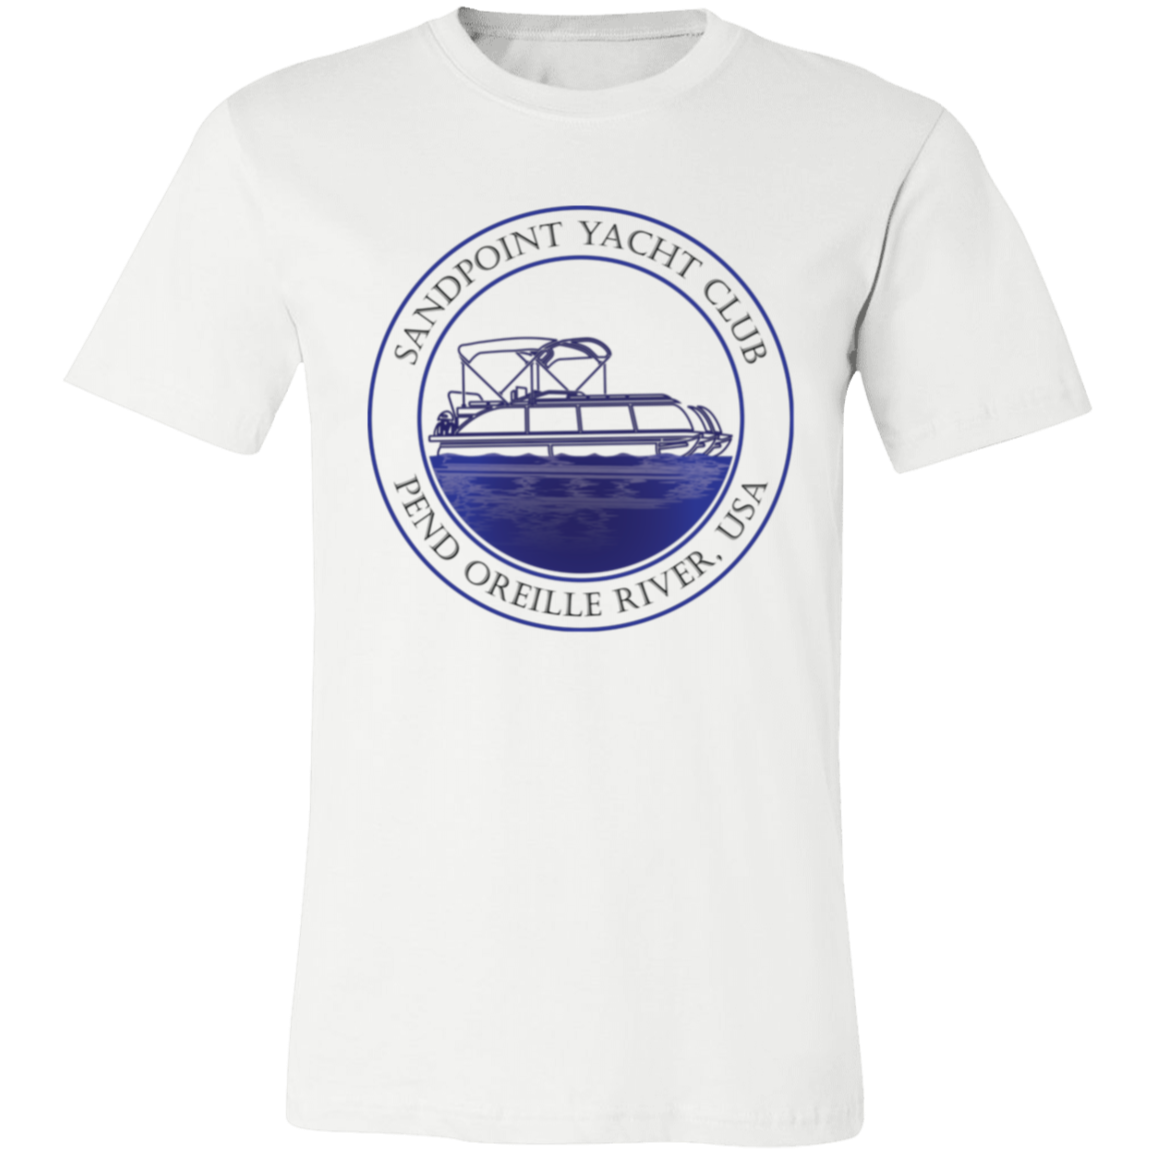 Sandpoint Yacht Club - Shirt